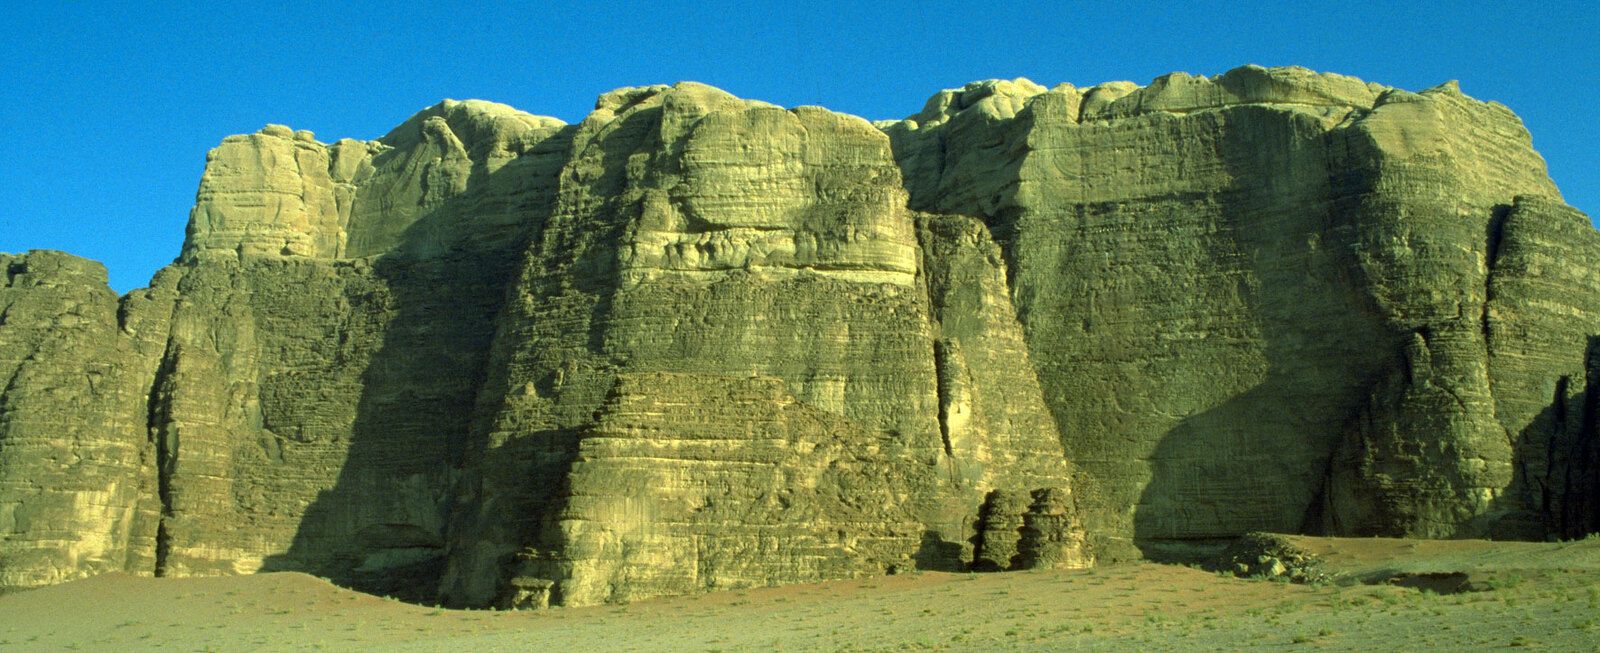 Jordanie Guerre sainte Wadi rum escalade topo Abert